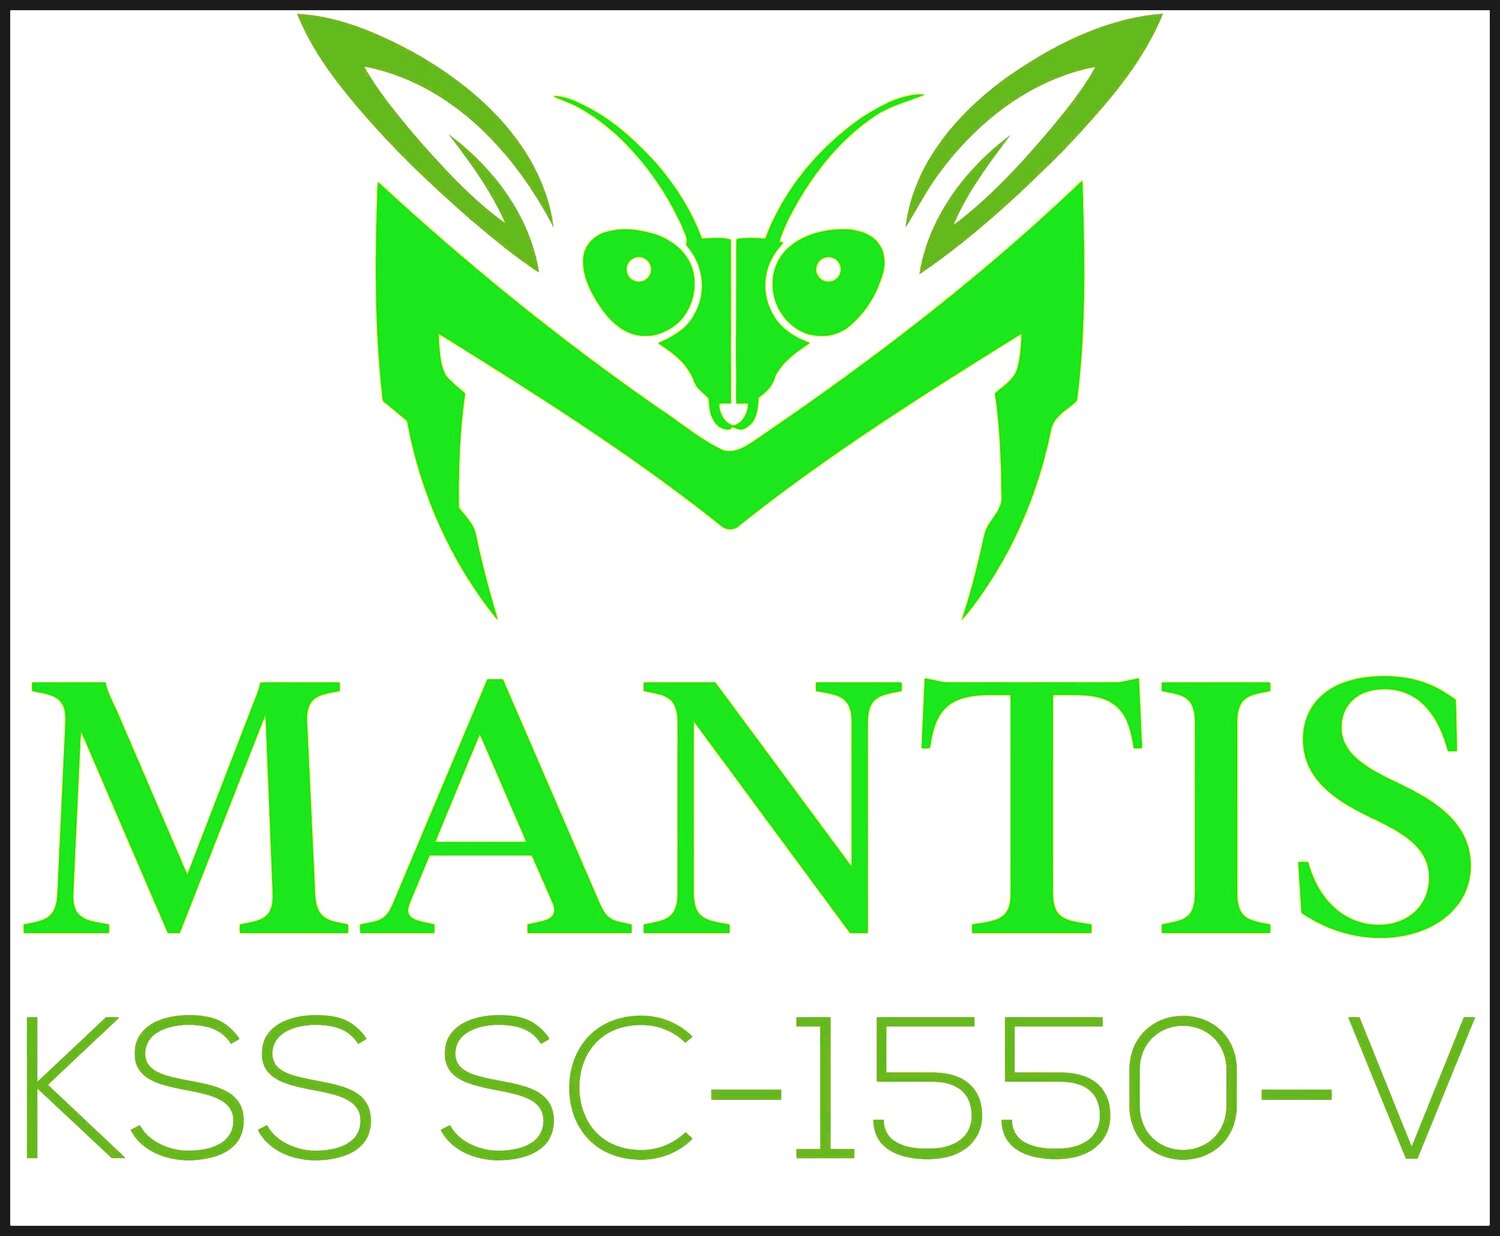 The Mantis Saga